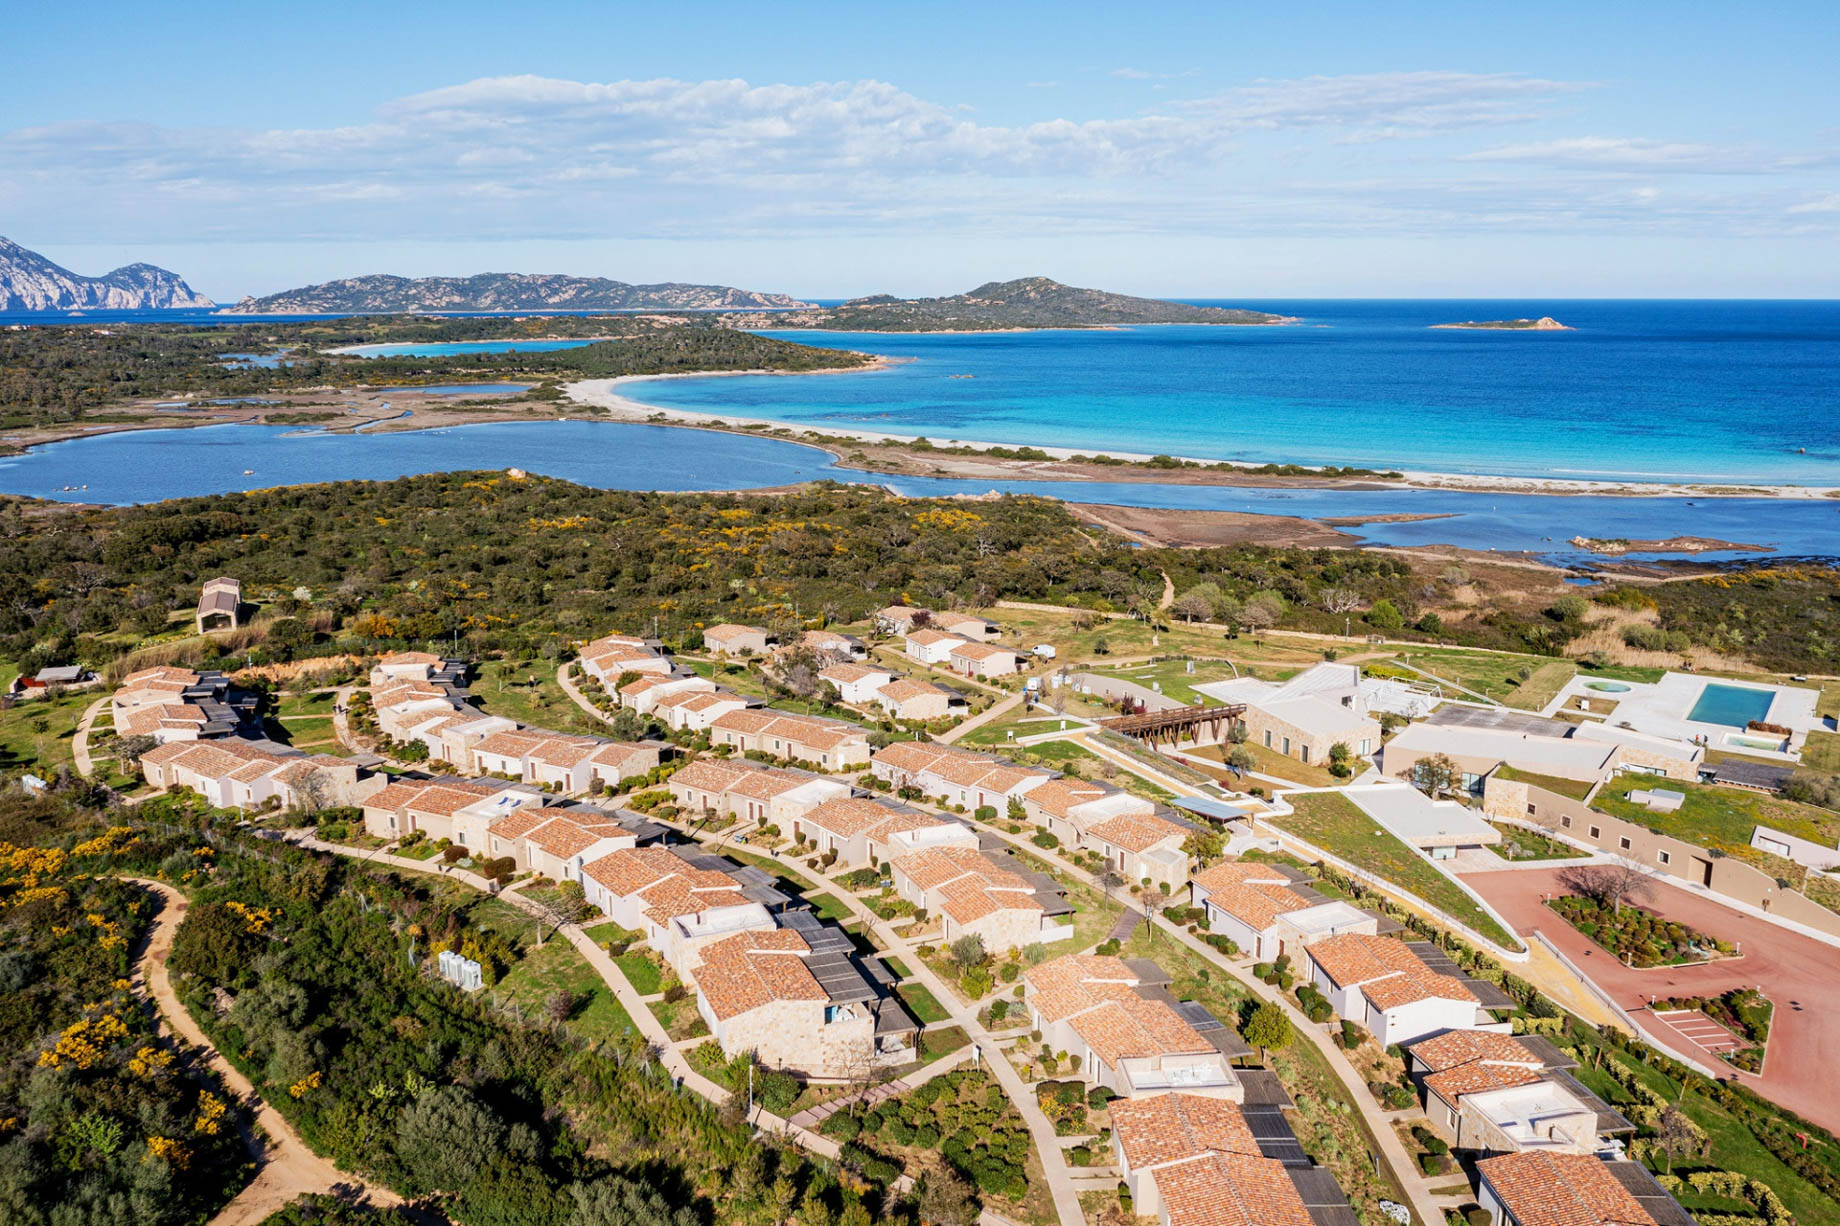 Baglioni Resort Sardinia – San Teodoro, Sardegna, Italy – Resort Aerial View